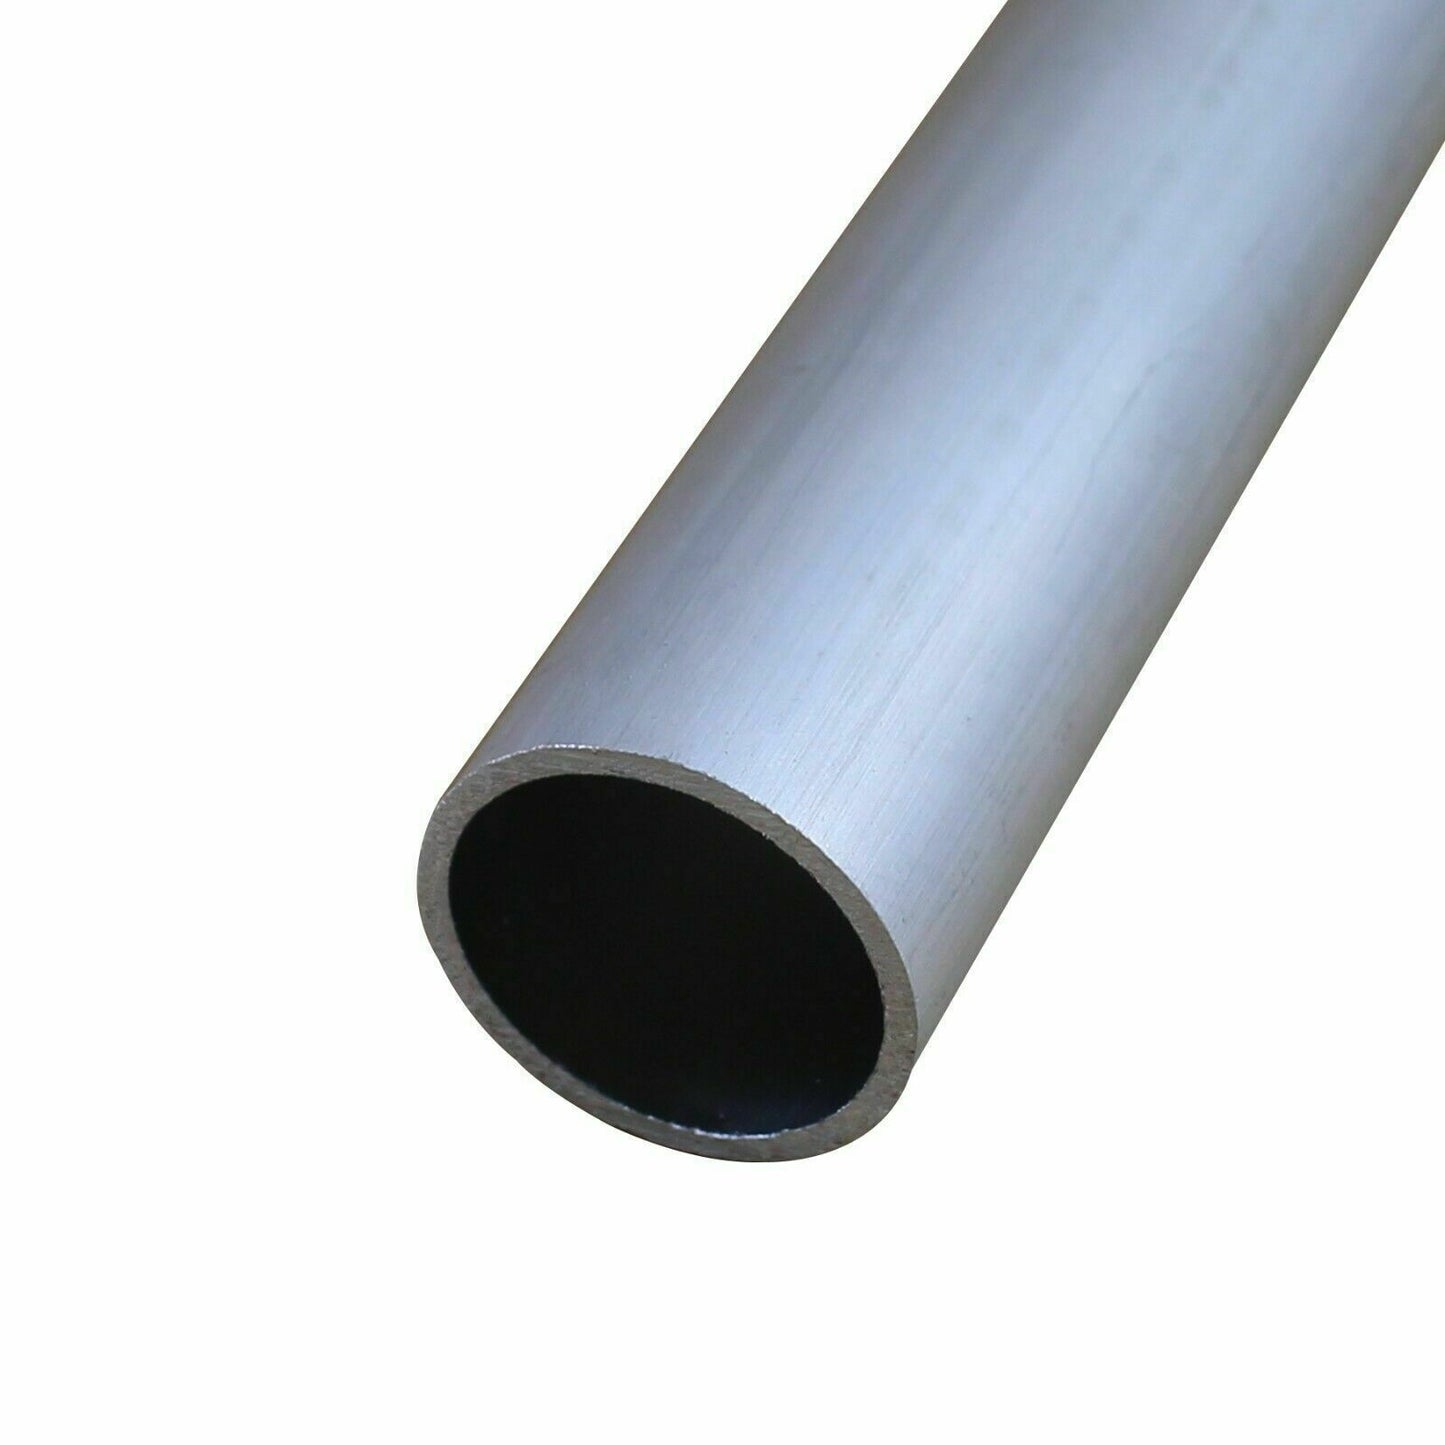 OD 34 mm ID 28 mm 1 pièce Tube rond en aluminium